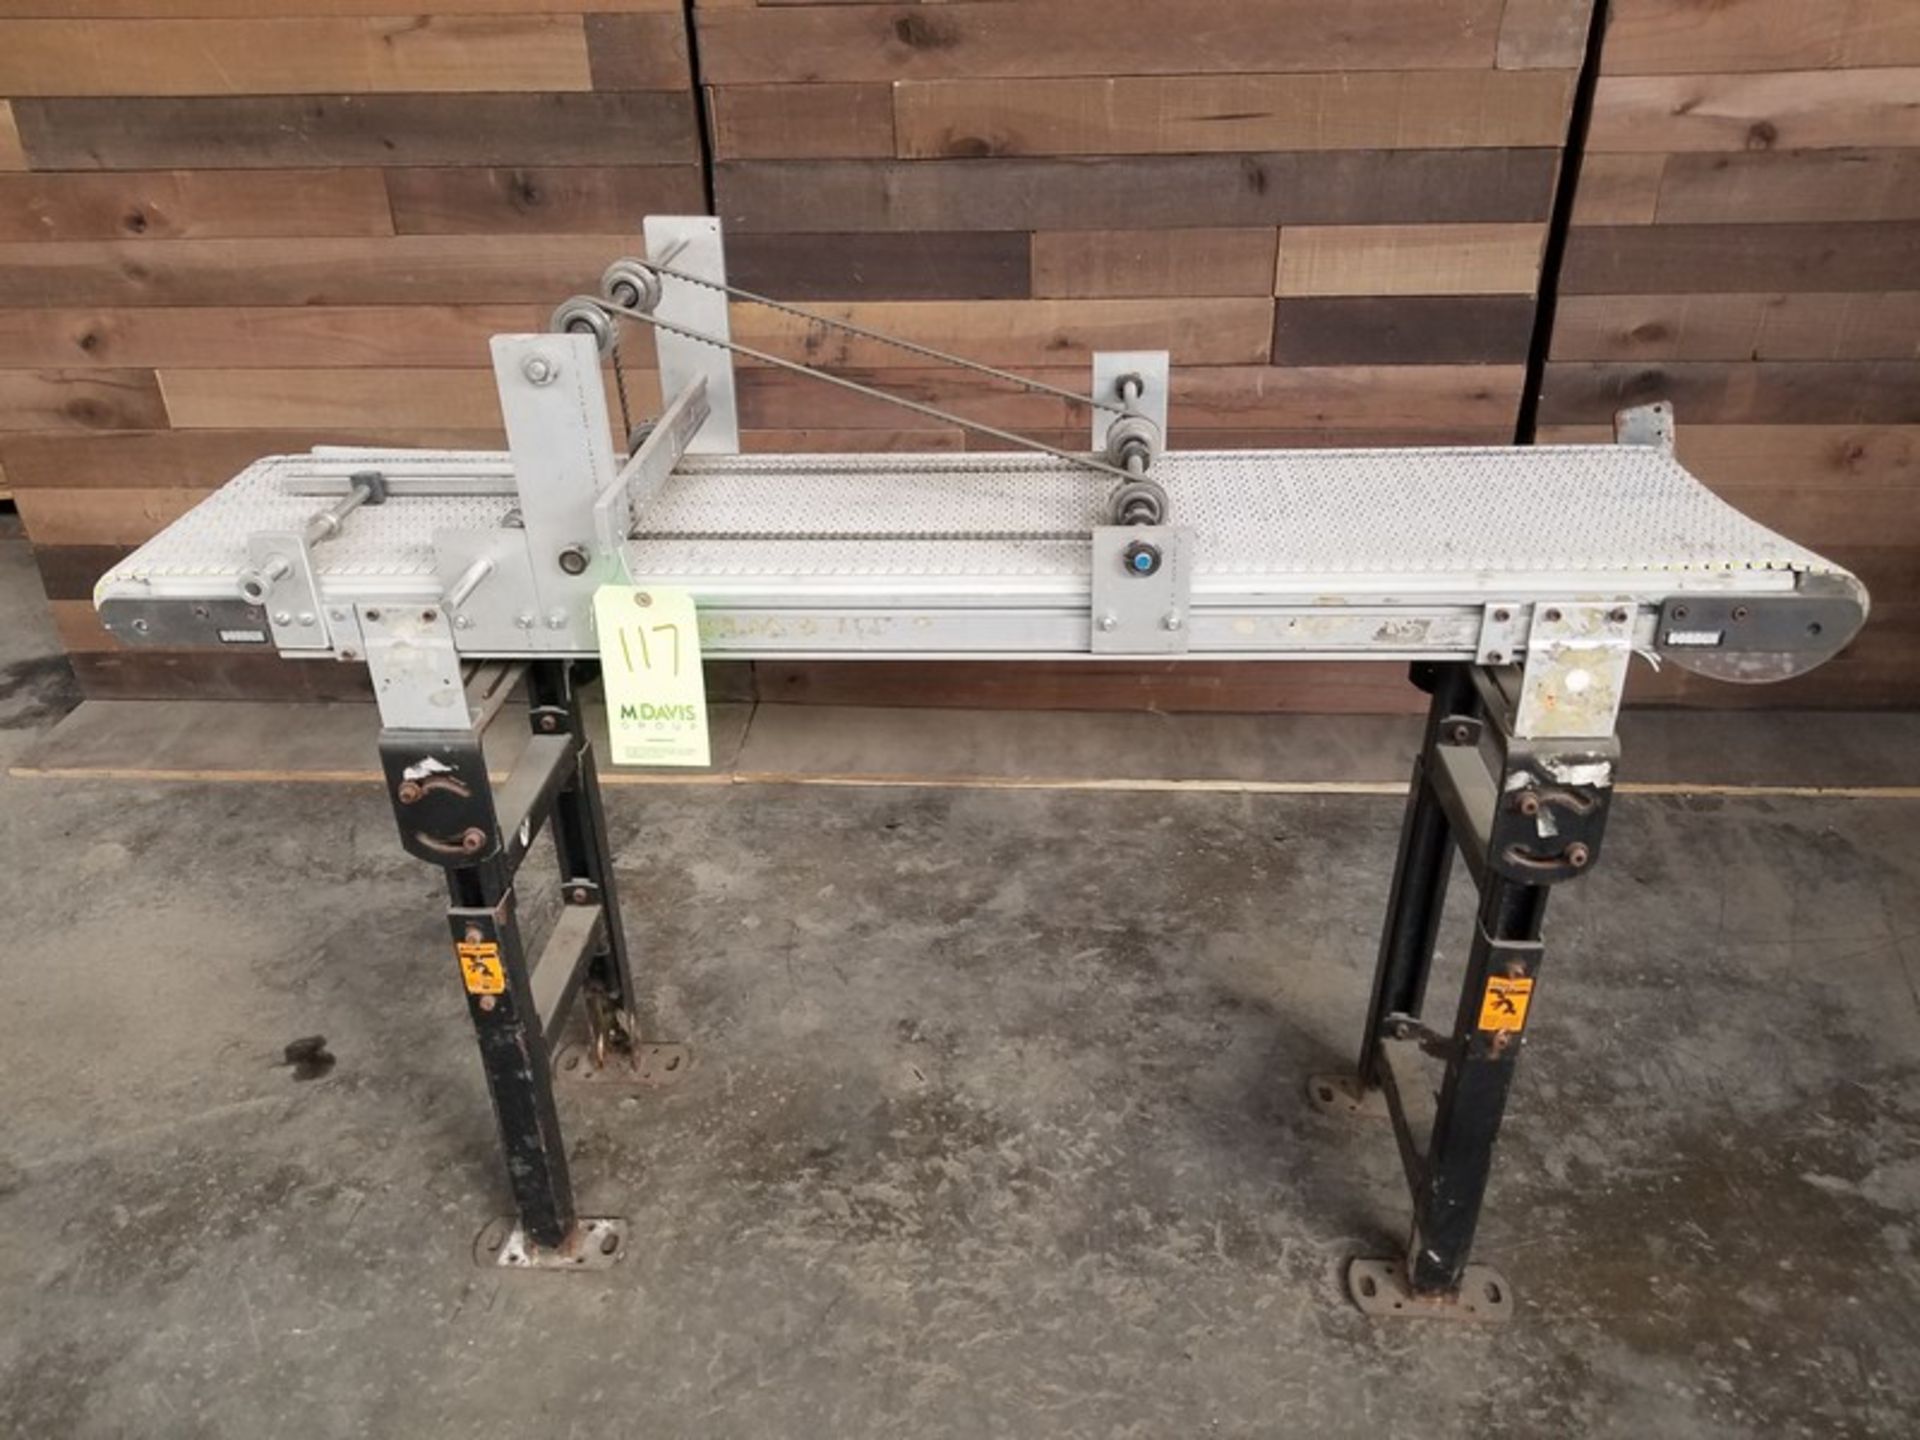 Aprox. 11" wide x 58" long x 32" high Dorner plastic belt conveyor (Handling, Loading & Site